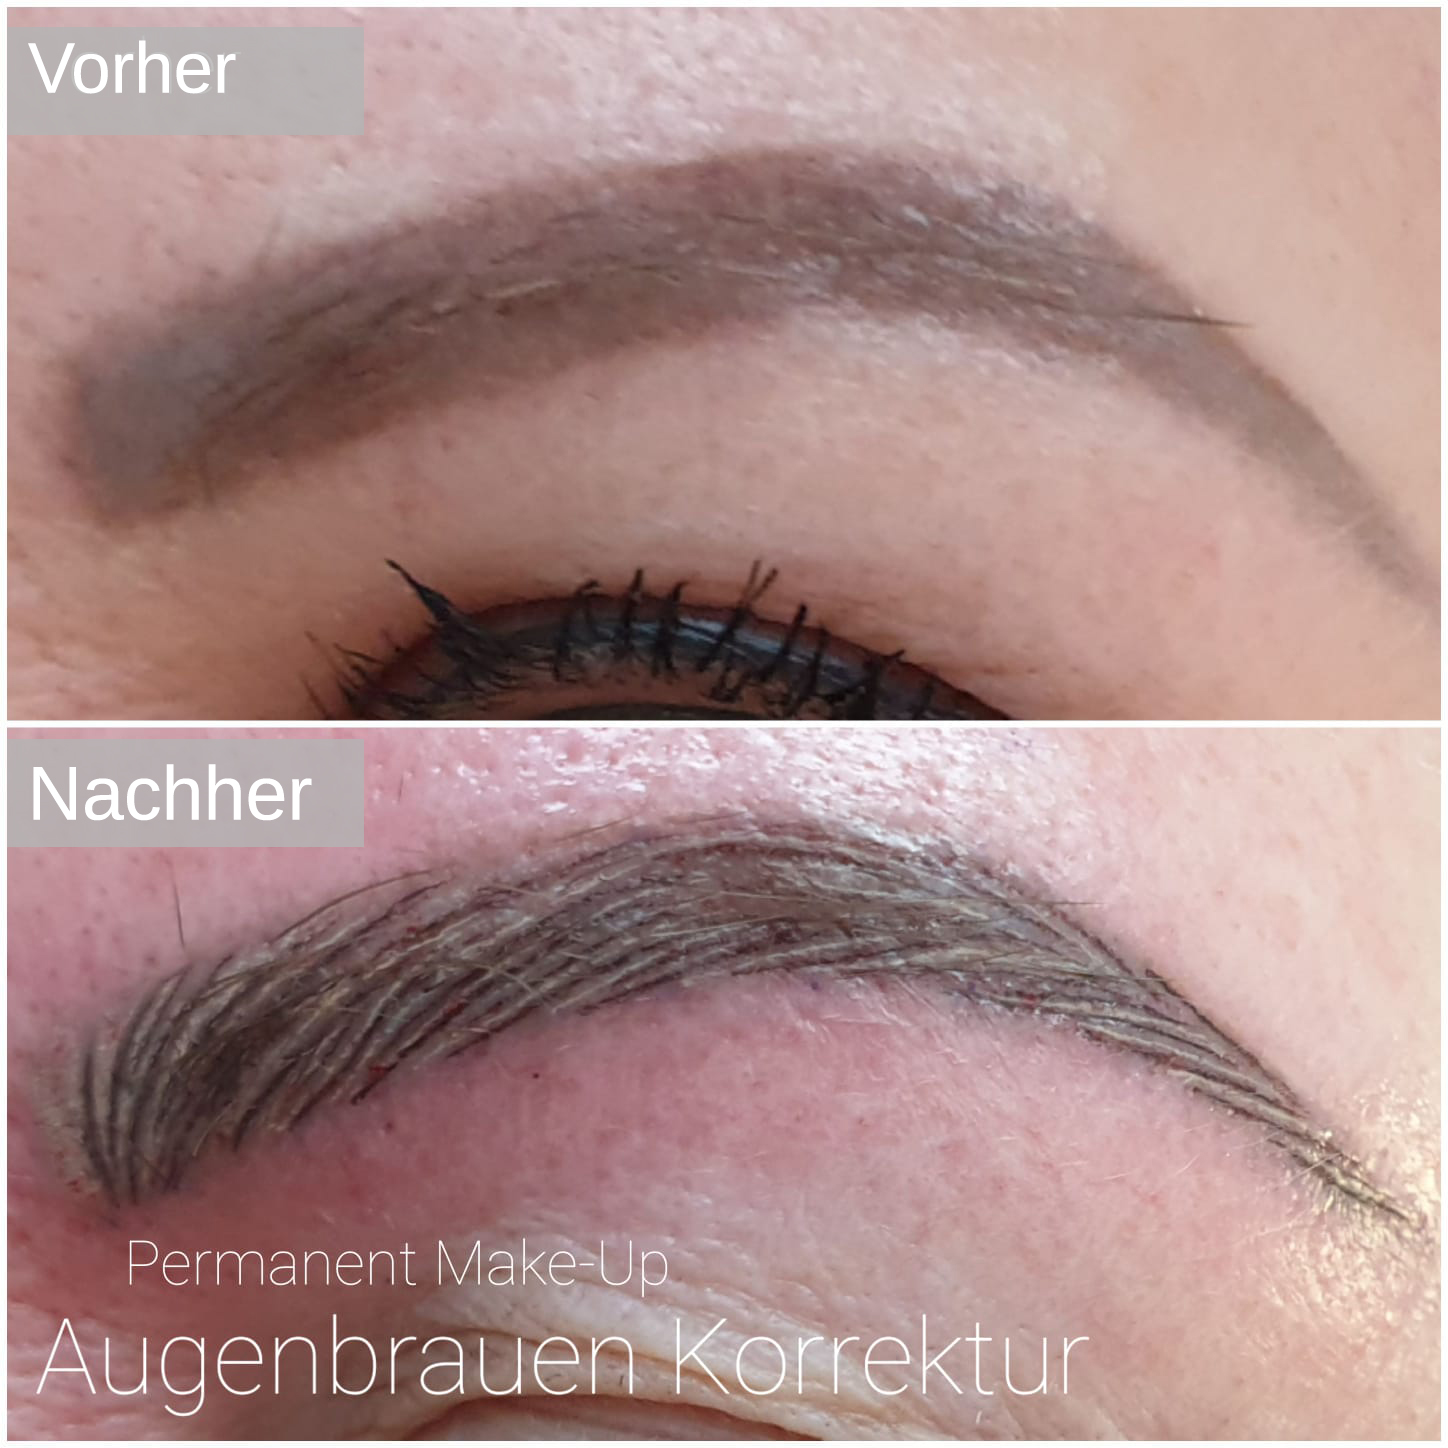 Augenbrauenkorrektur Beauty Bonn Pureline Elke Munzer